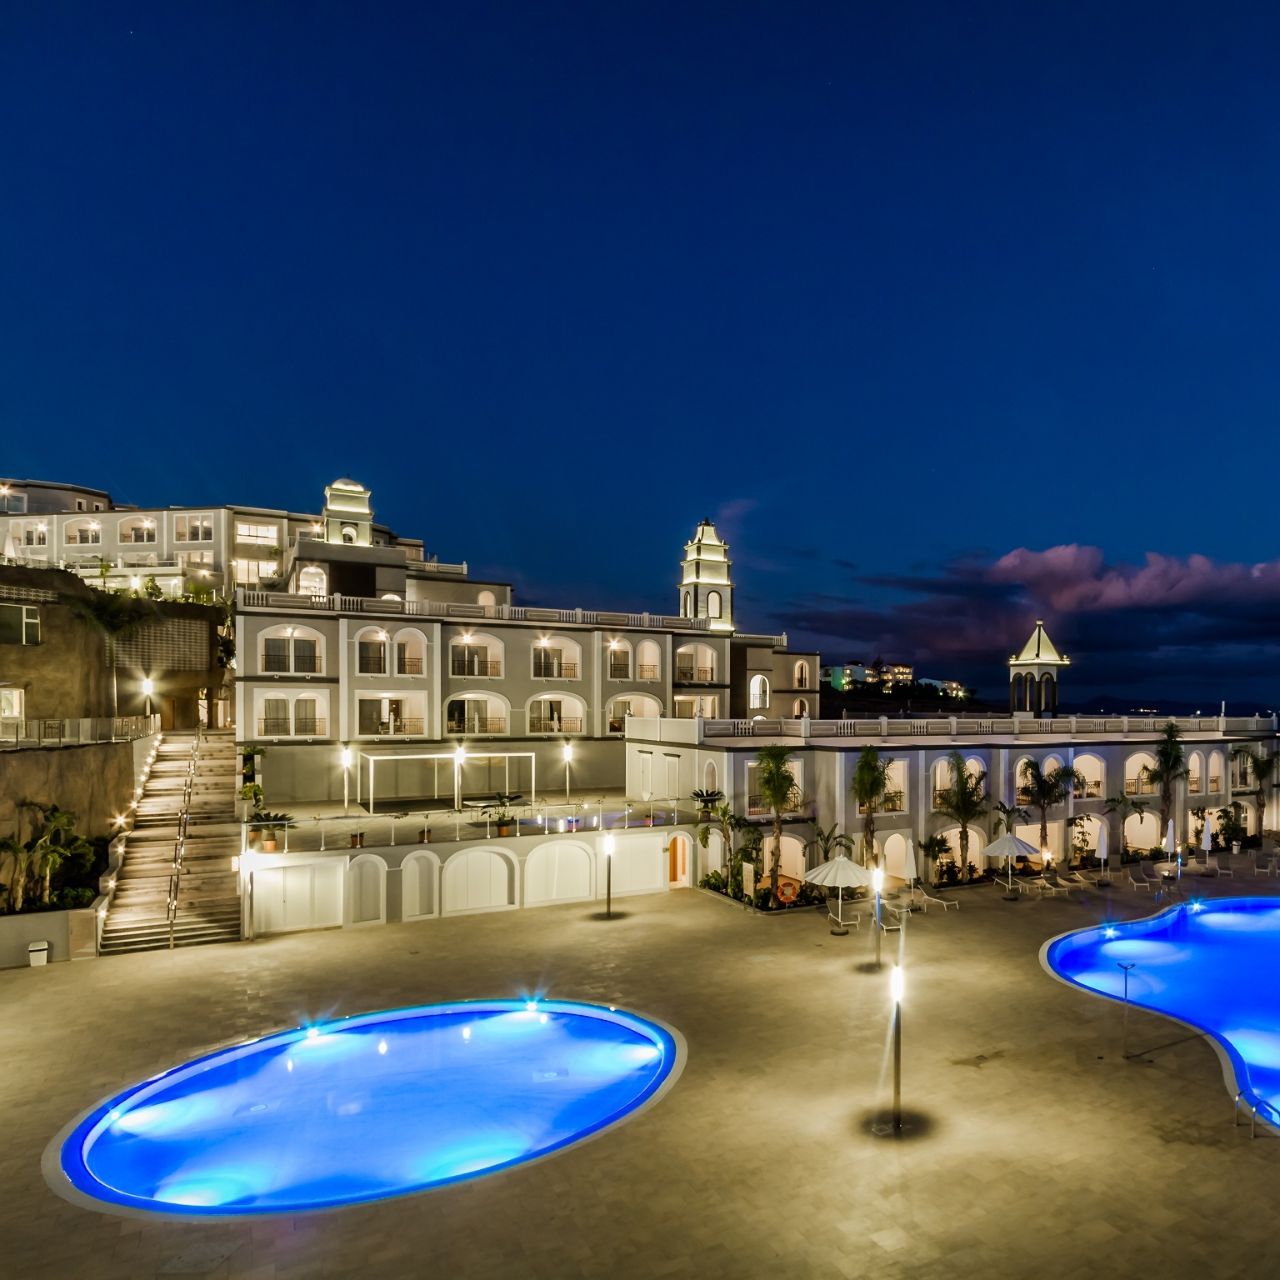 Hotel Royal Palm Fuerteventura Las Palmas de Gran Canaria réserver à bas  prix avec HRS